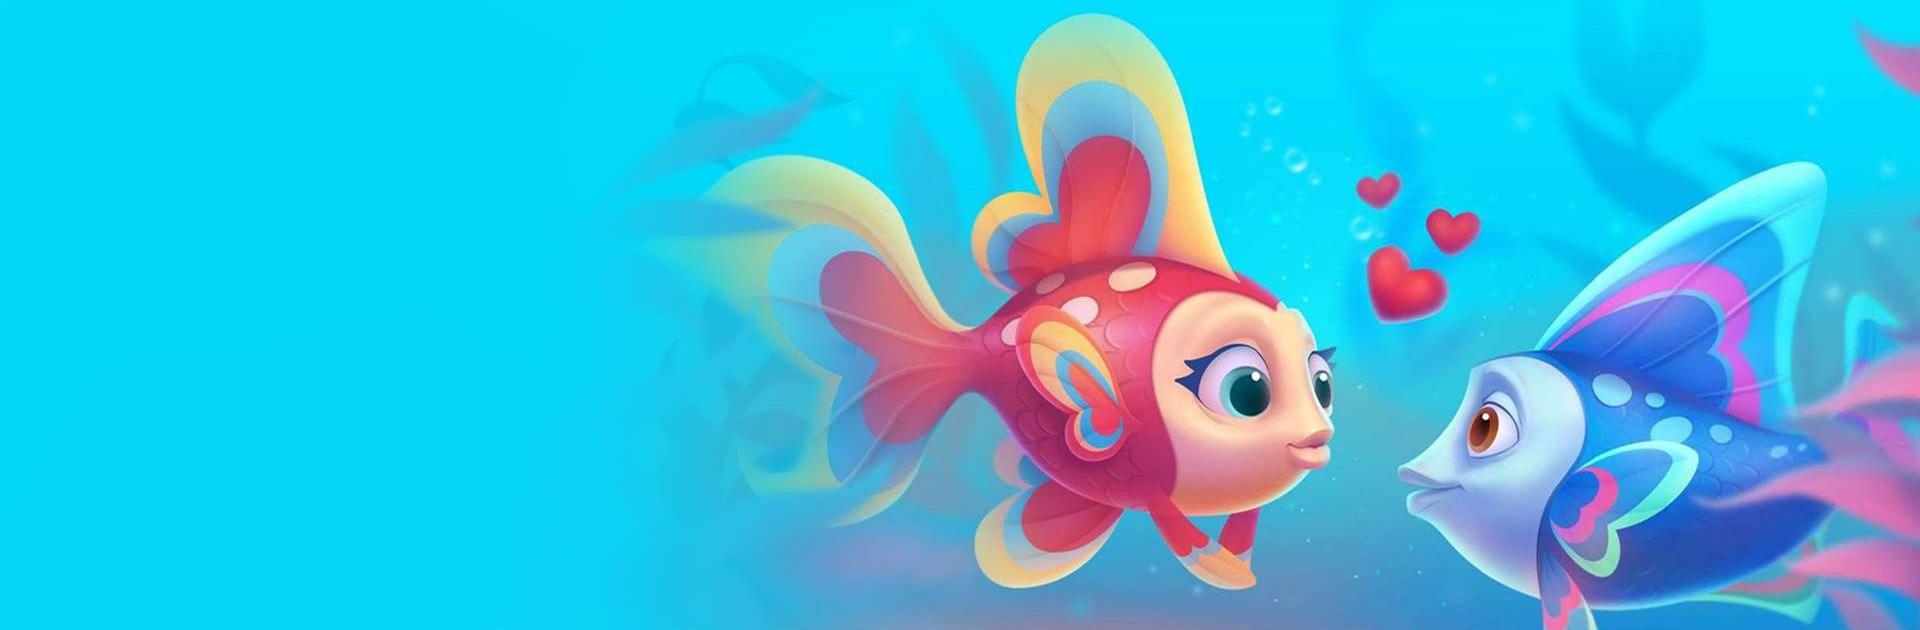 Fishdom ‒ Applications sur Google Play